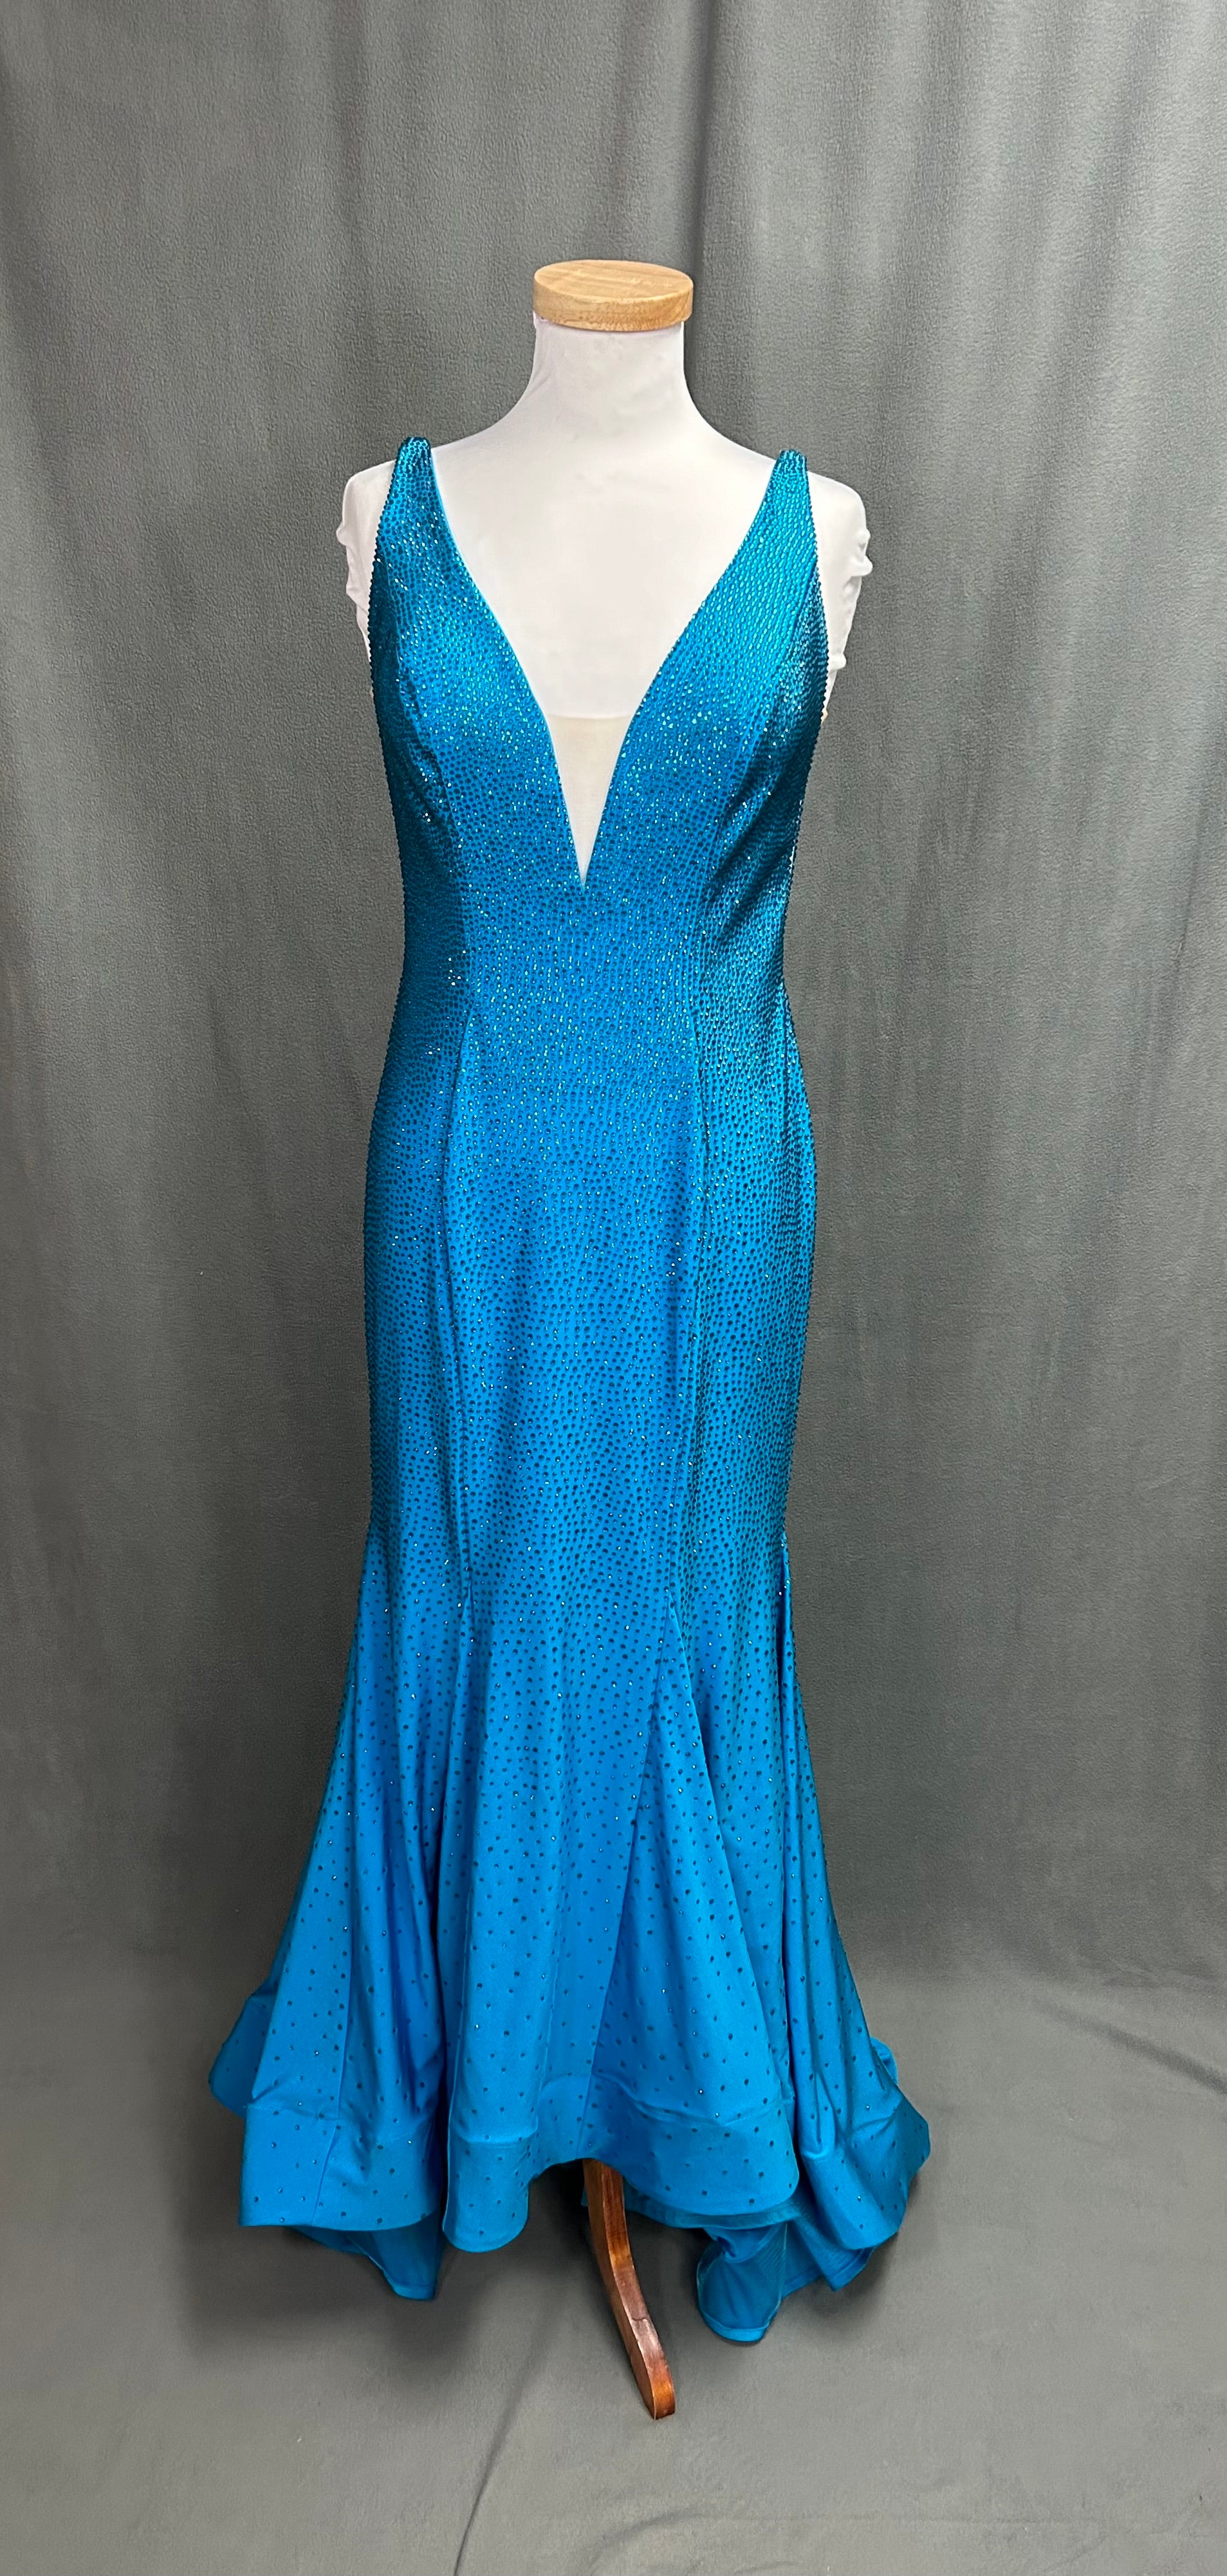 Sherri Hill blue dress, size 10